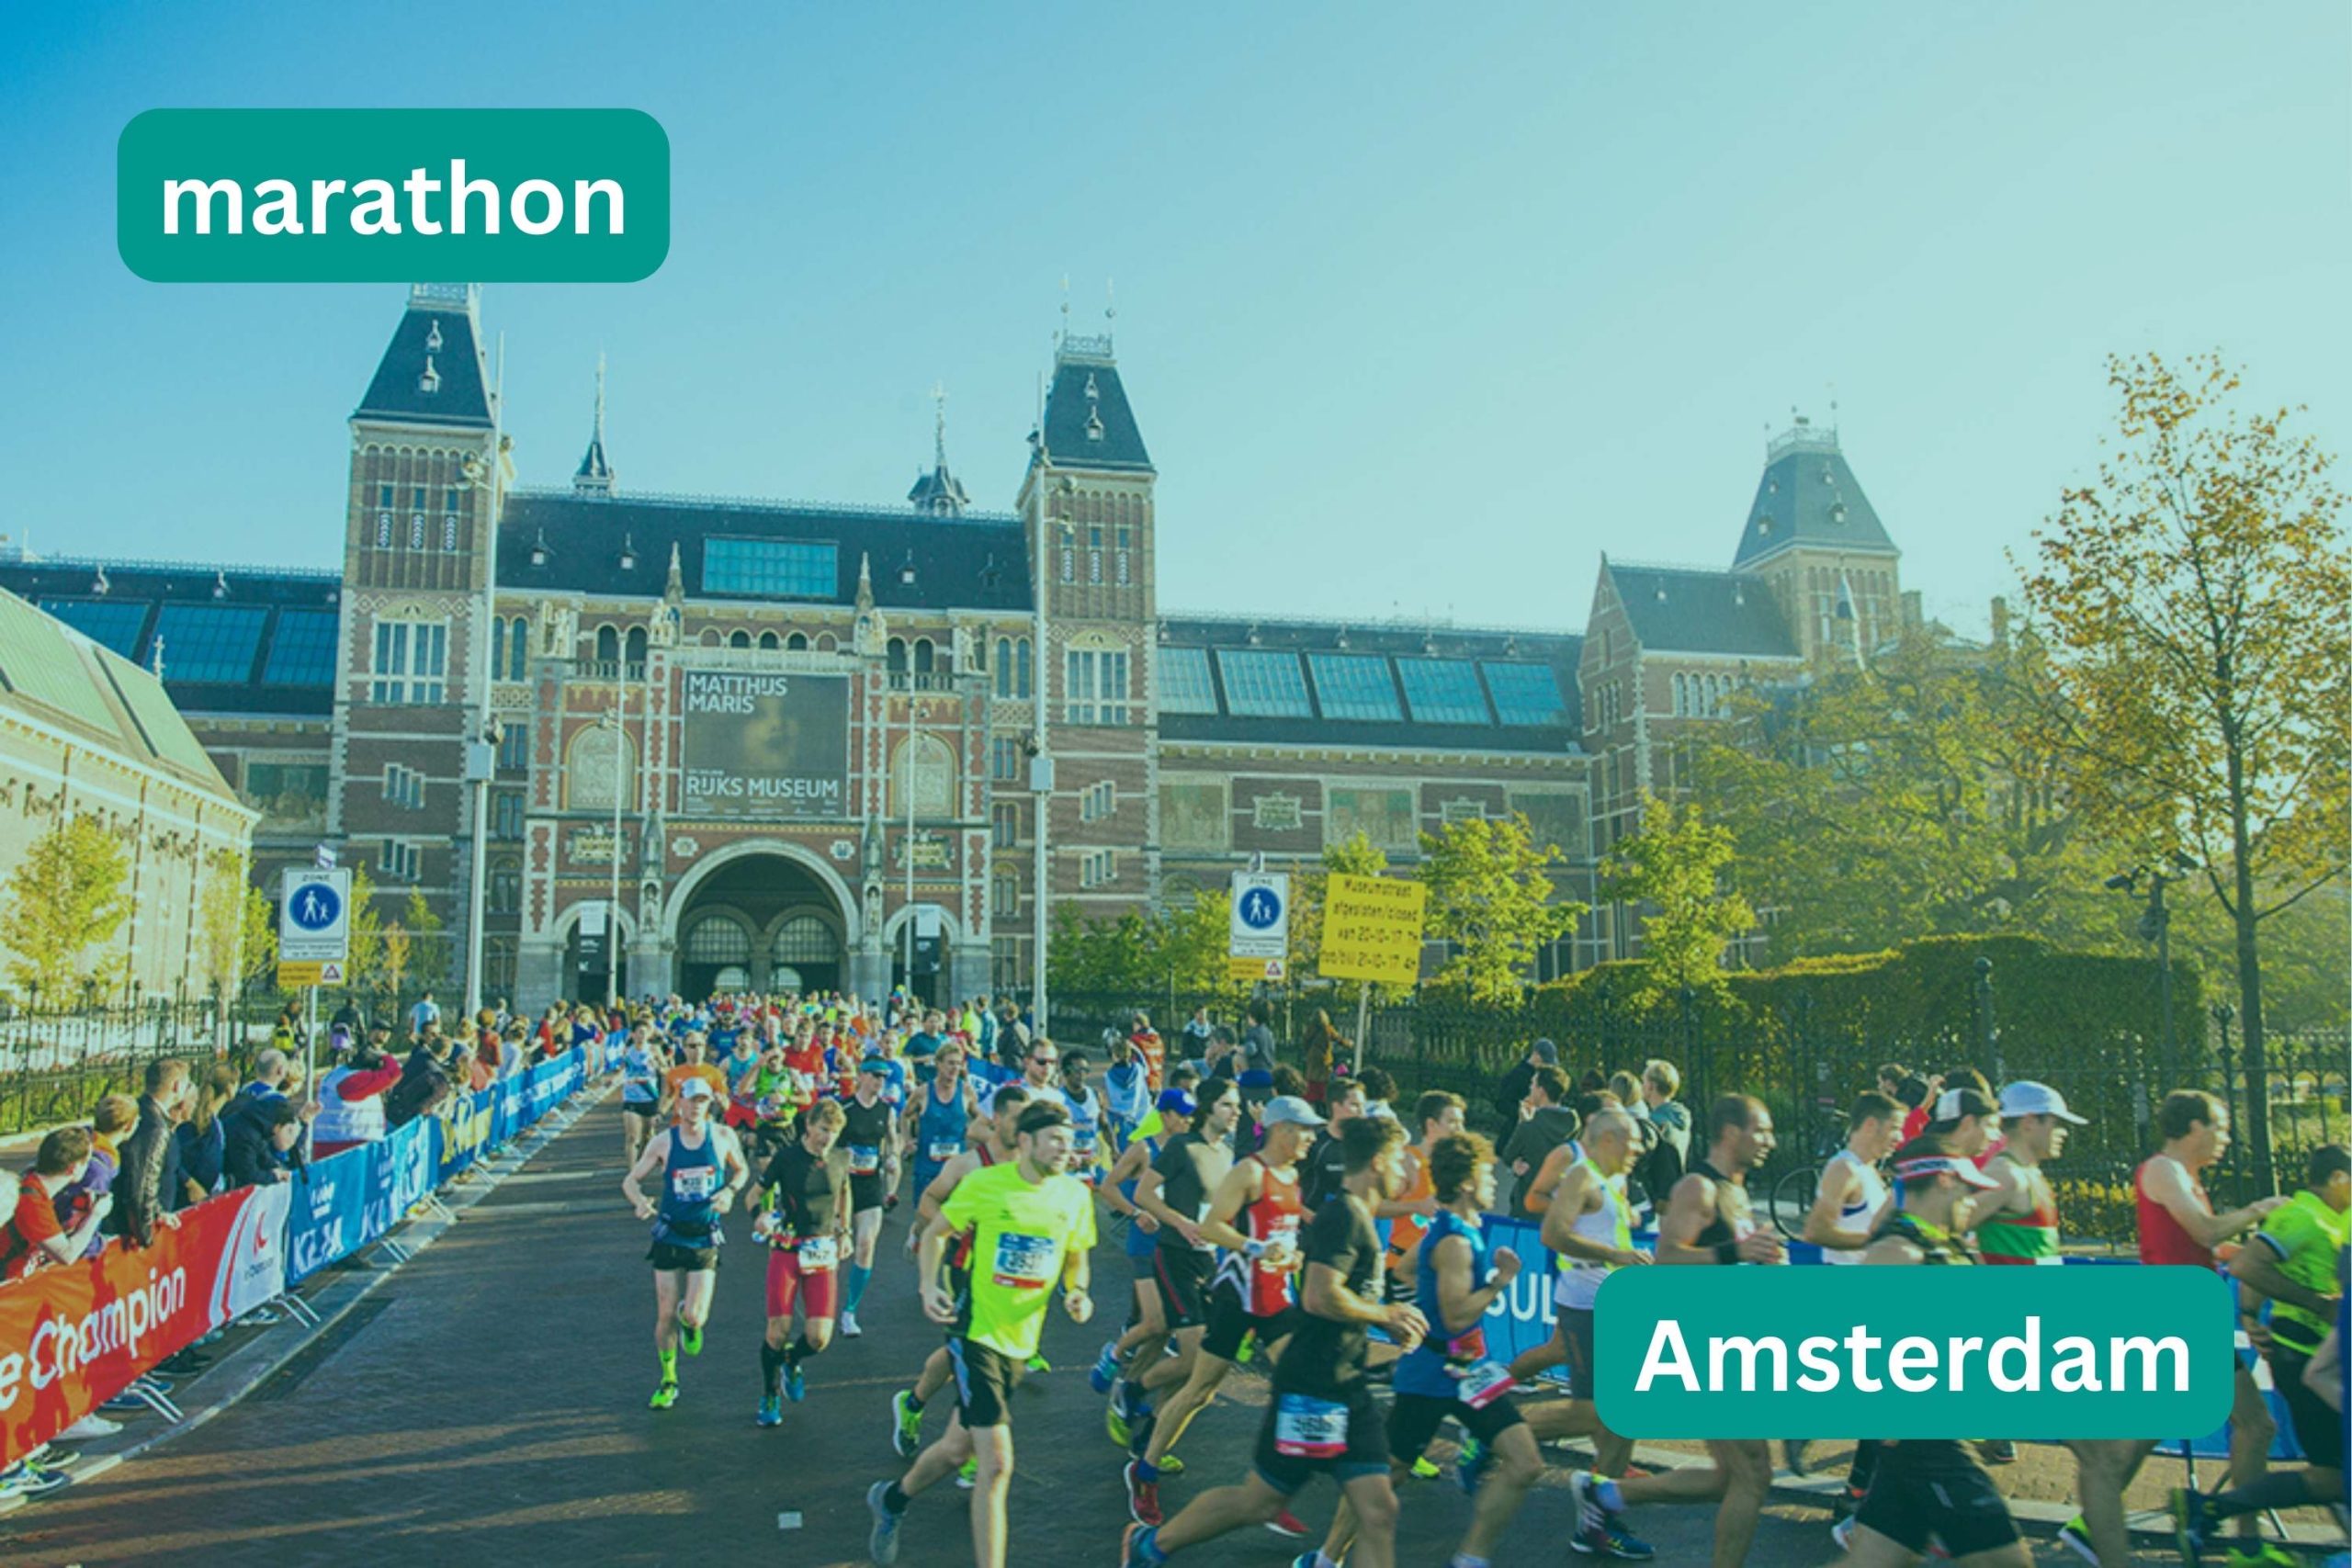 mass of people running in Amsterdam. title text: Marathon, Amsterdam